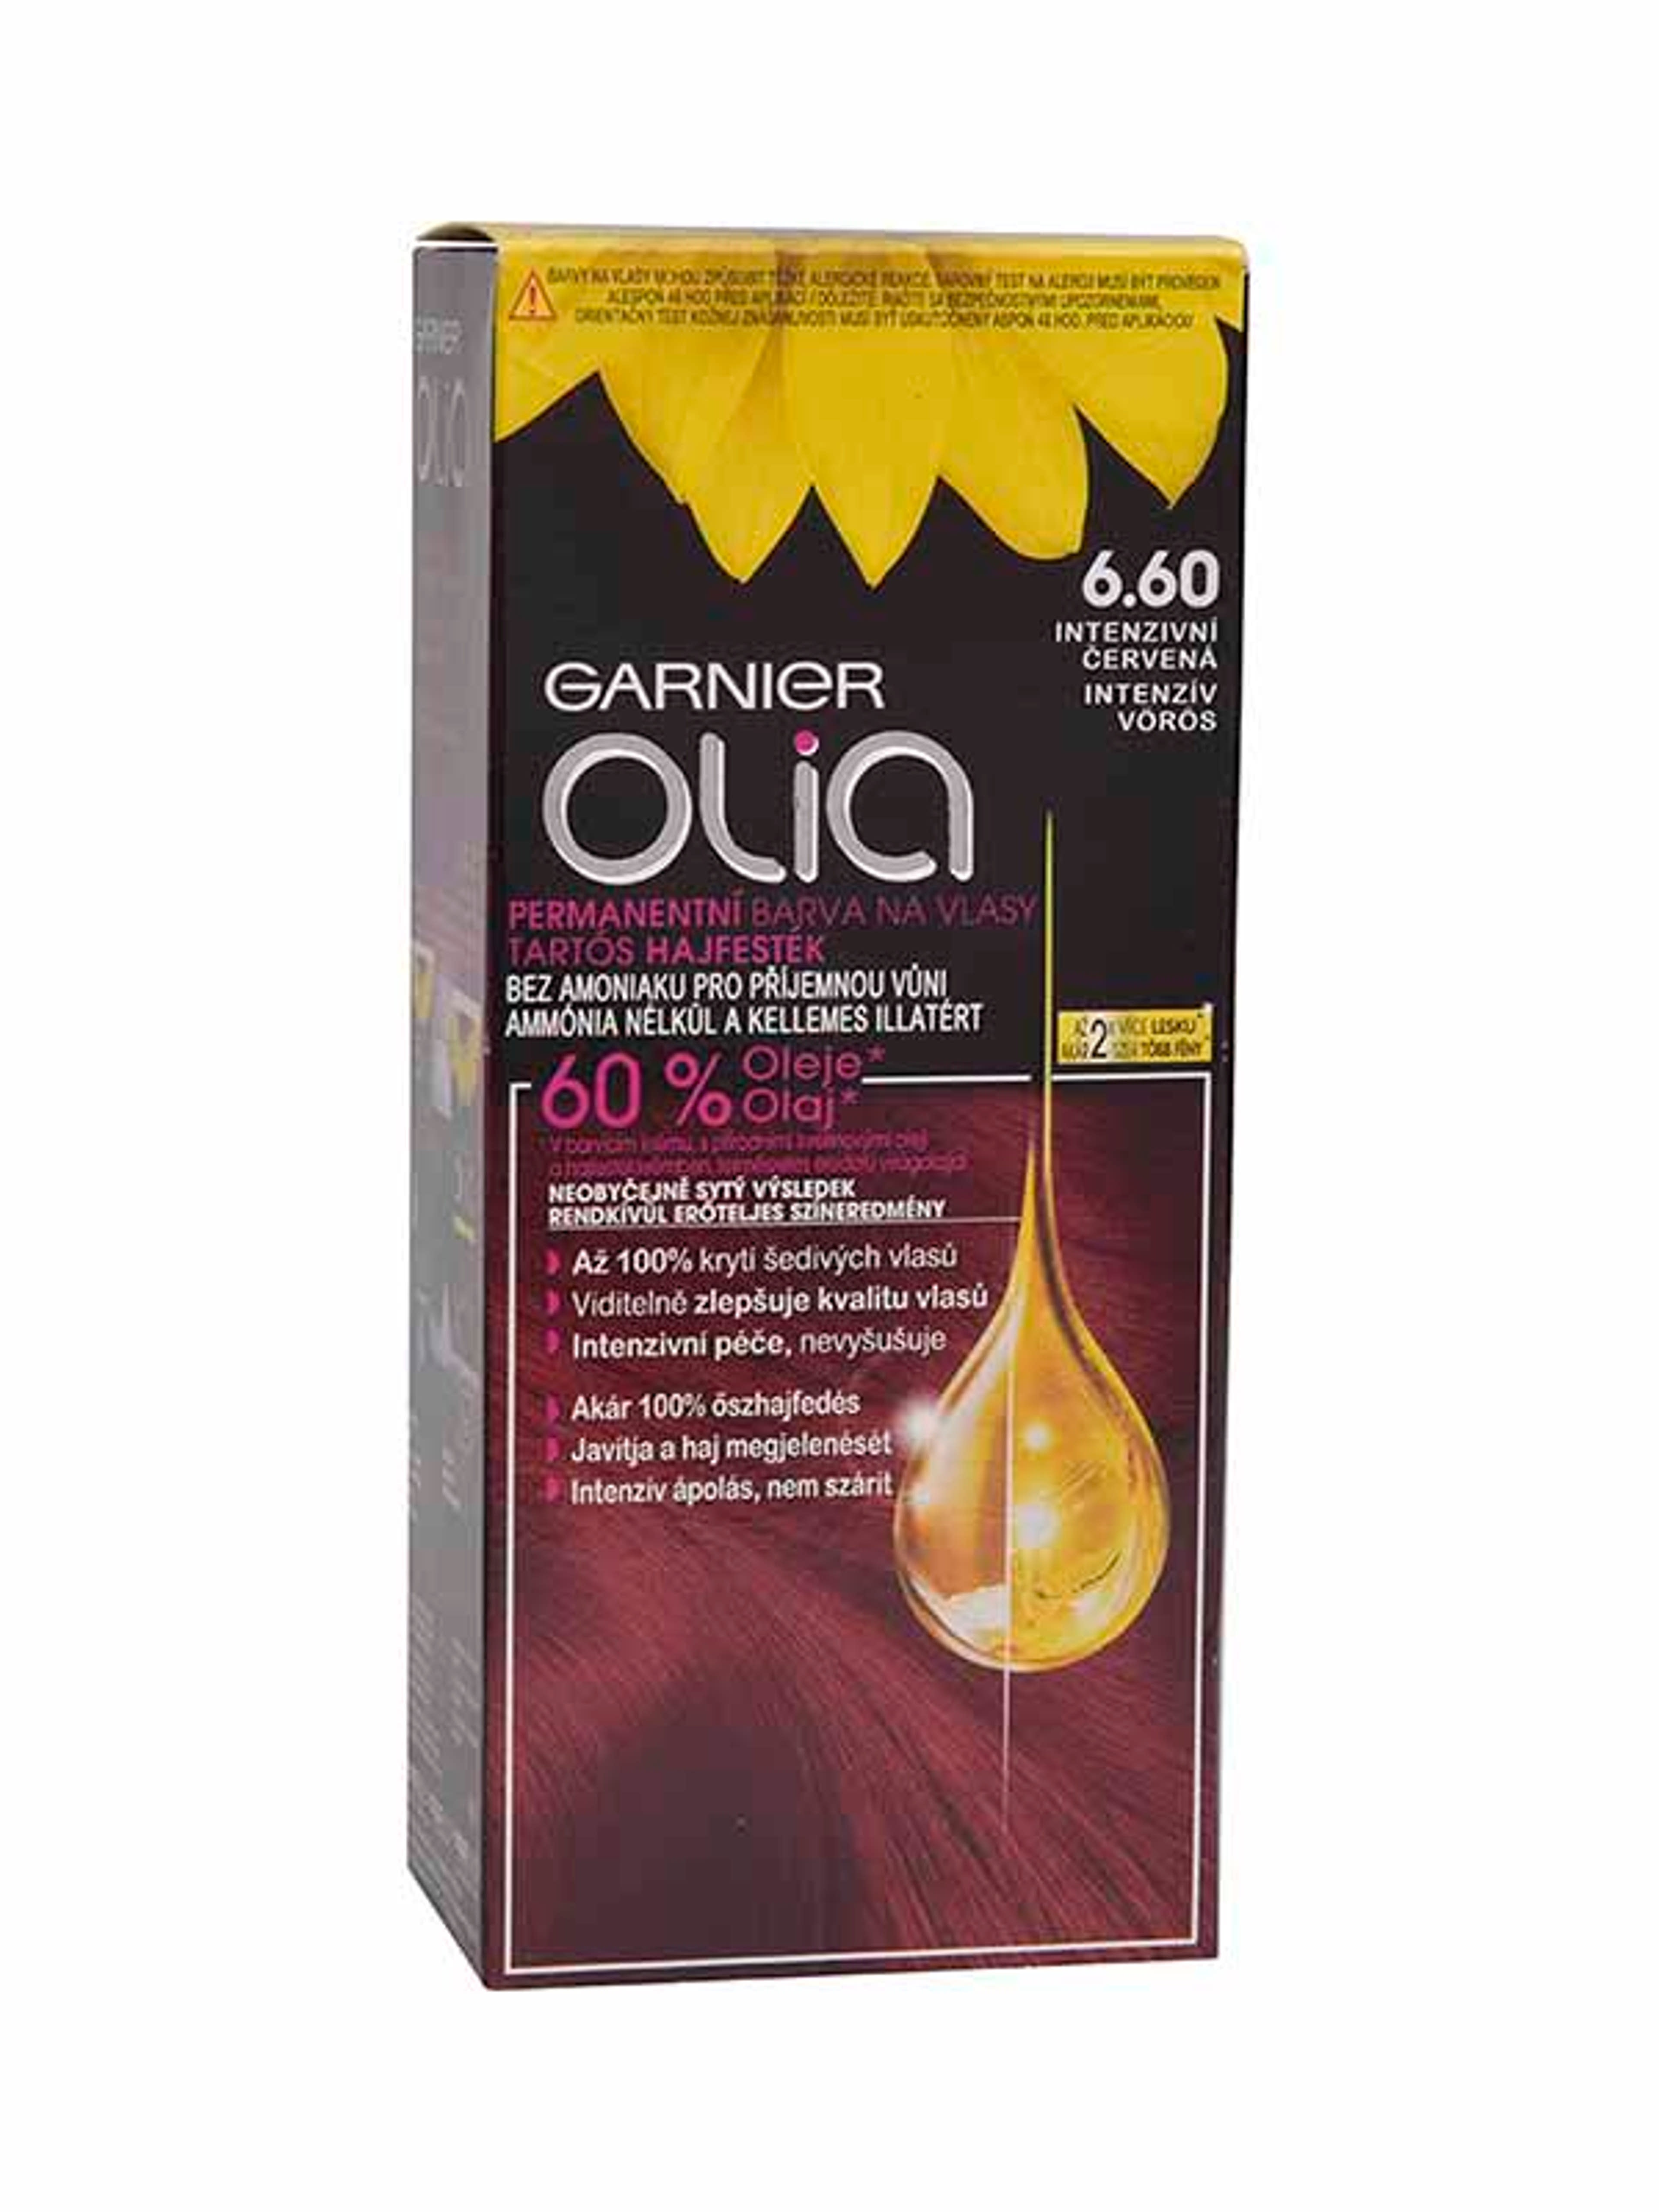 Garnier Olia tartós hajfesték 6.60 Intenzív vörös - 1 db-1